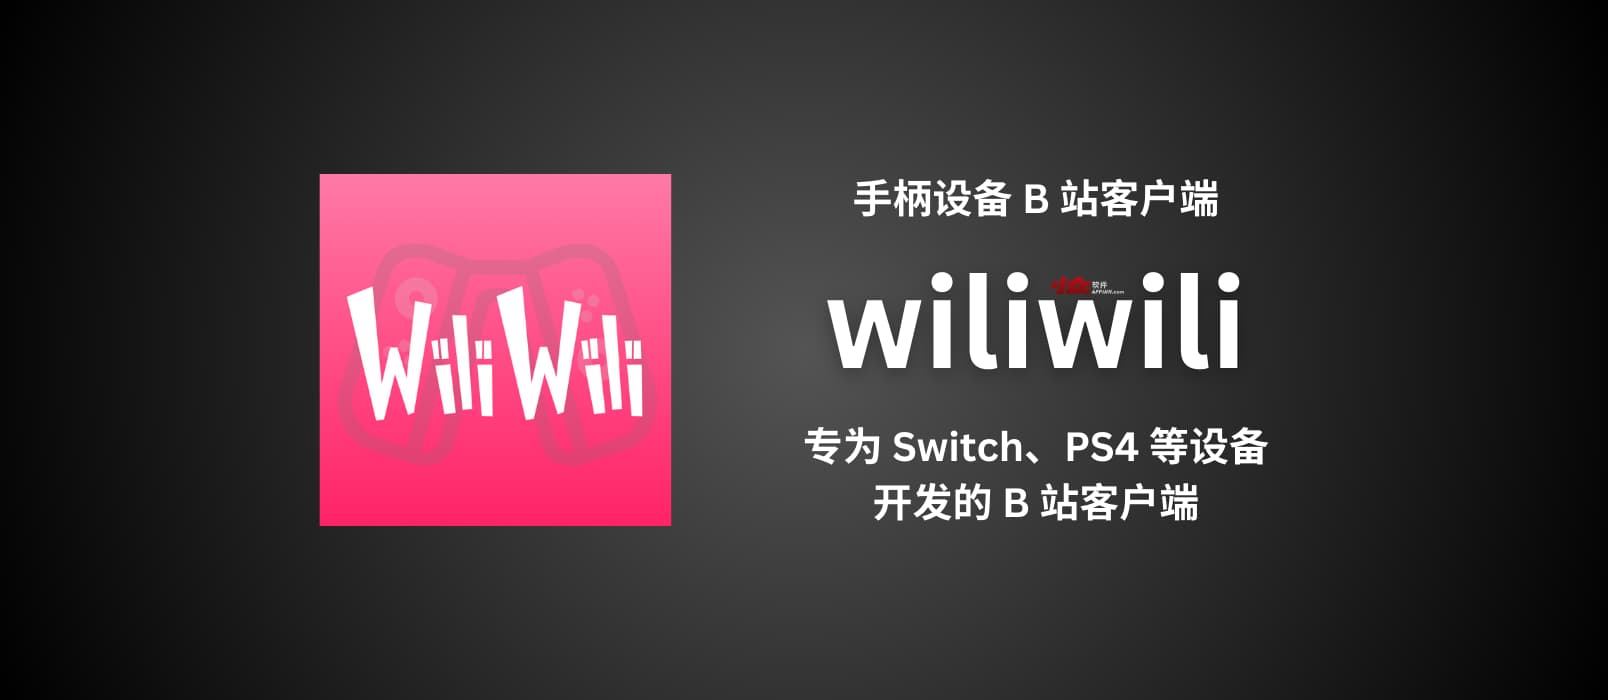 wiliwili - 专为任天堂 Switch、PS4、PSVita 等手柄设备开发的第三方开源 B 站客户端